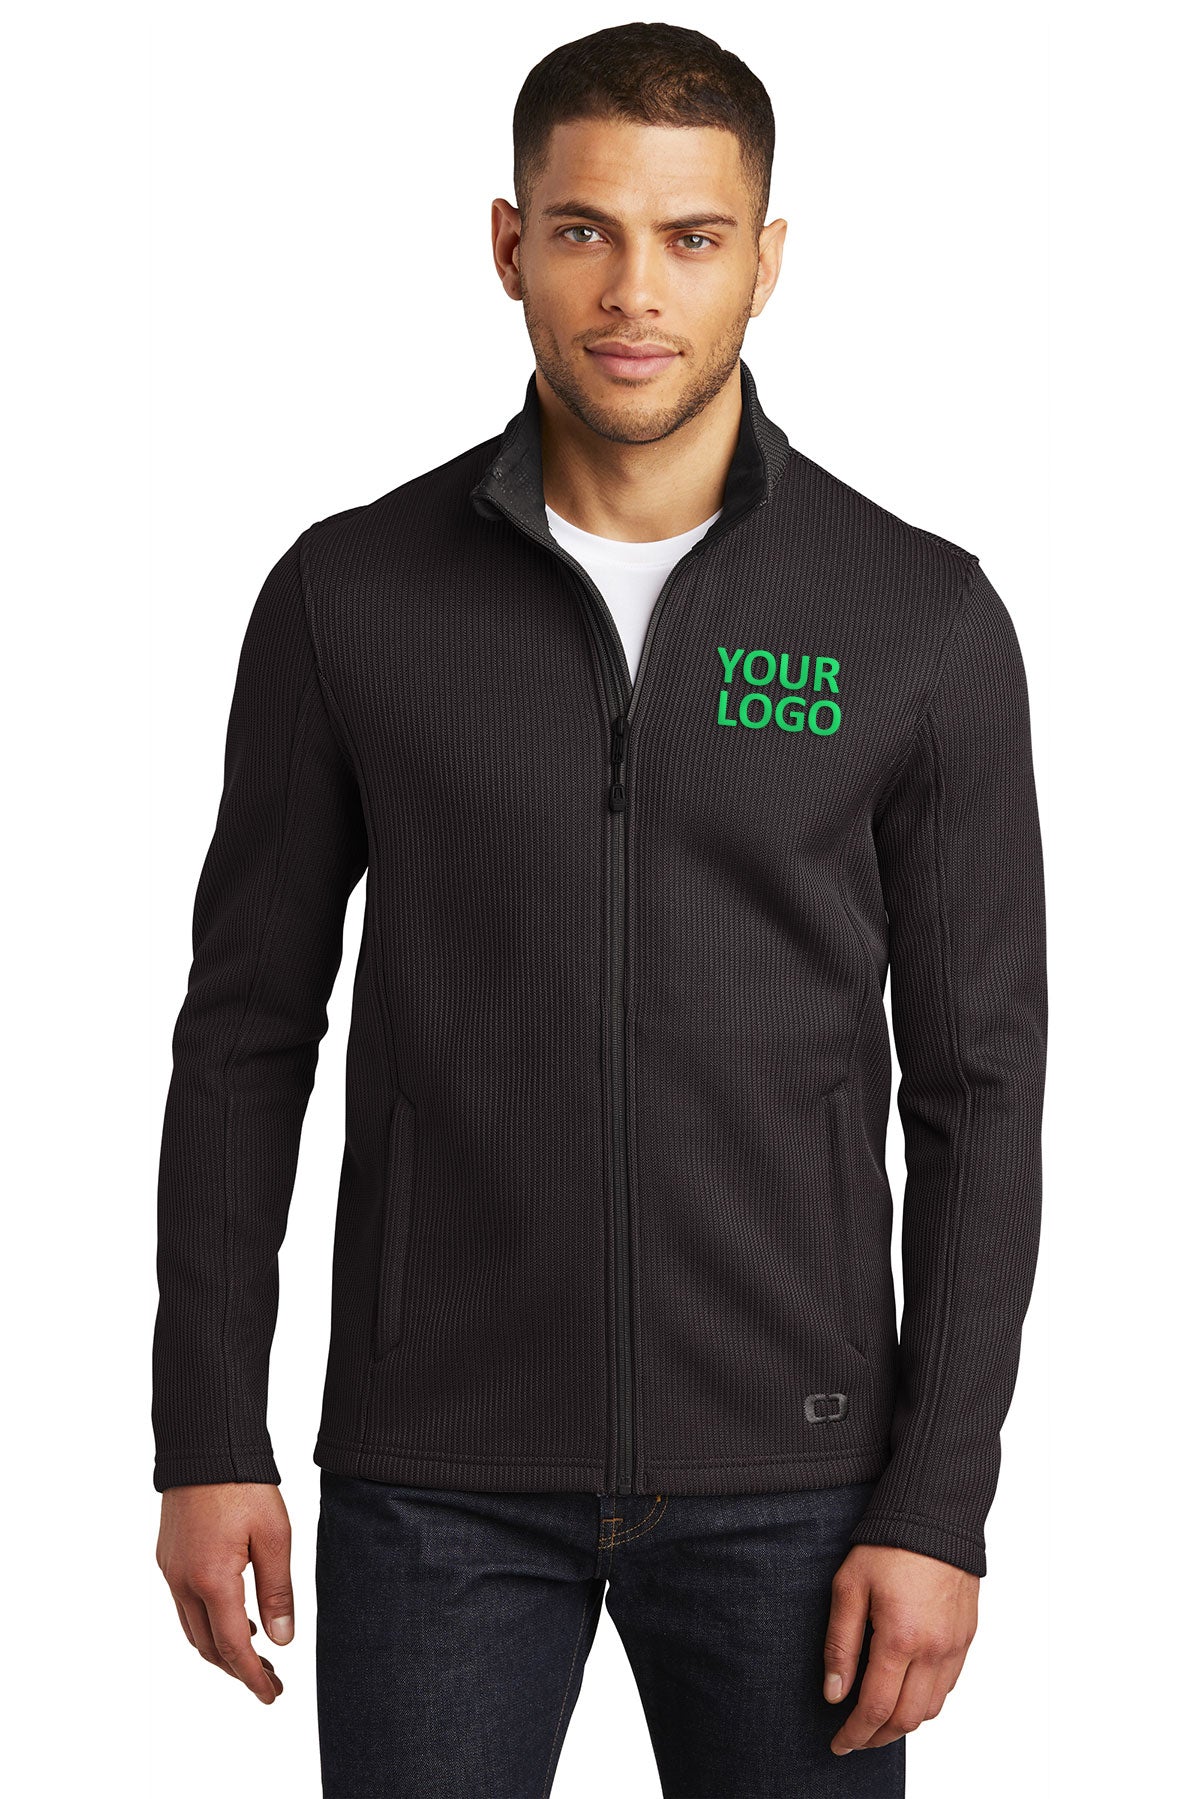 OGIO Blacktop OG727 business sweatshirts with logo